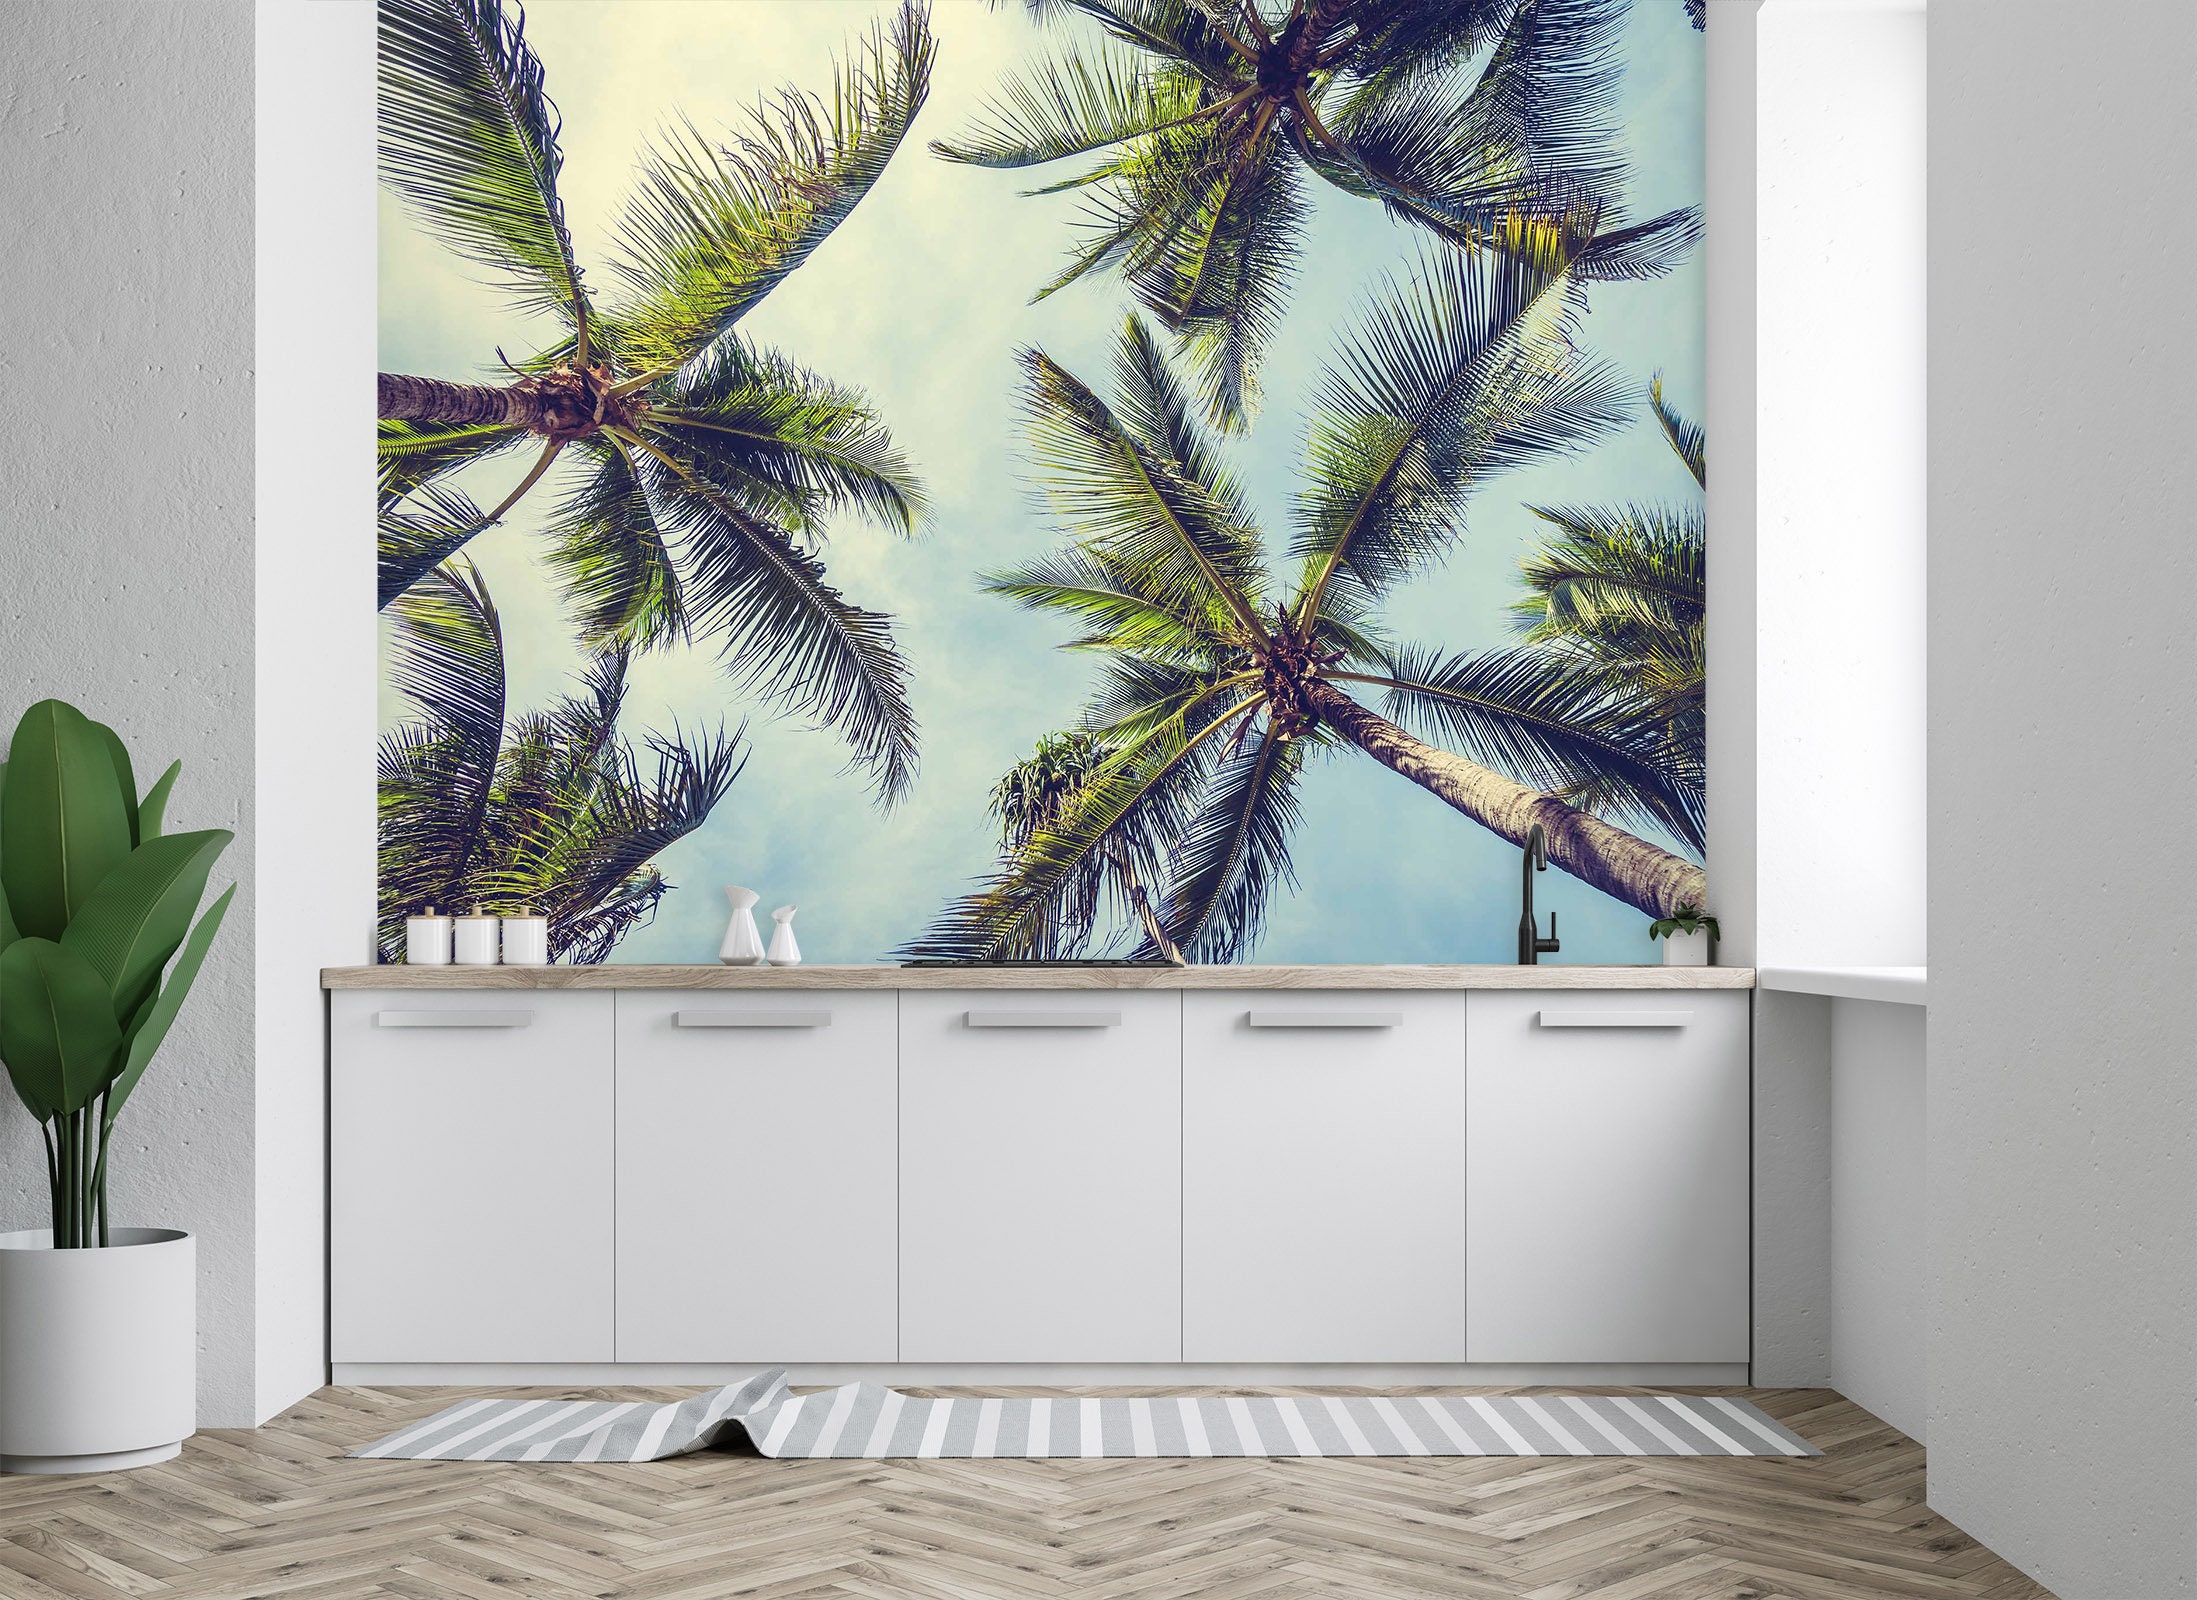 123x87312x219cm Coconut Tree 1026 Wallpaper | Etsy